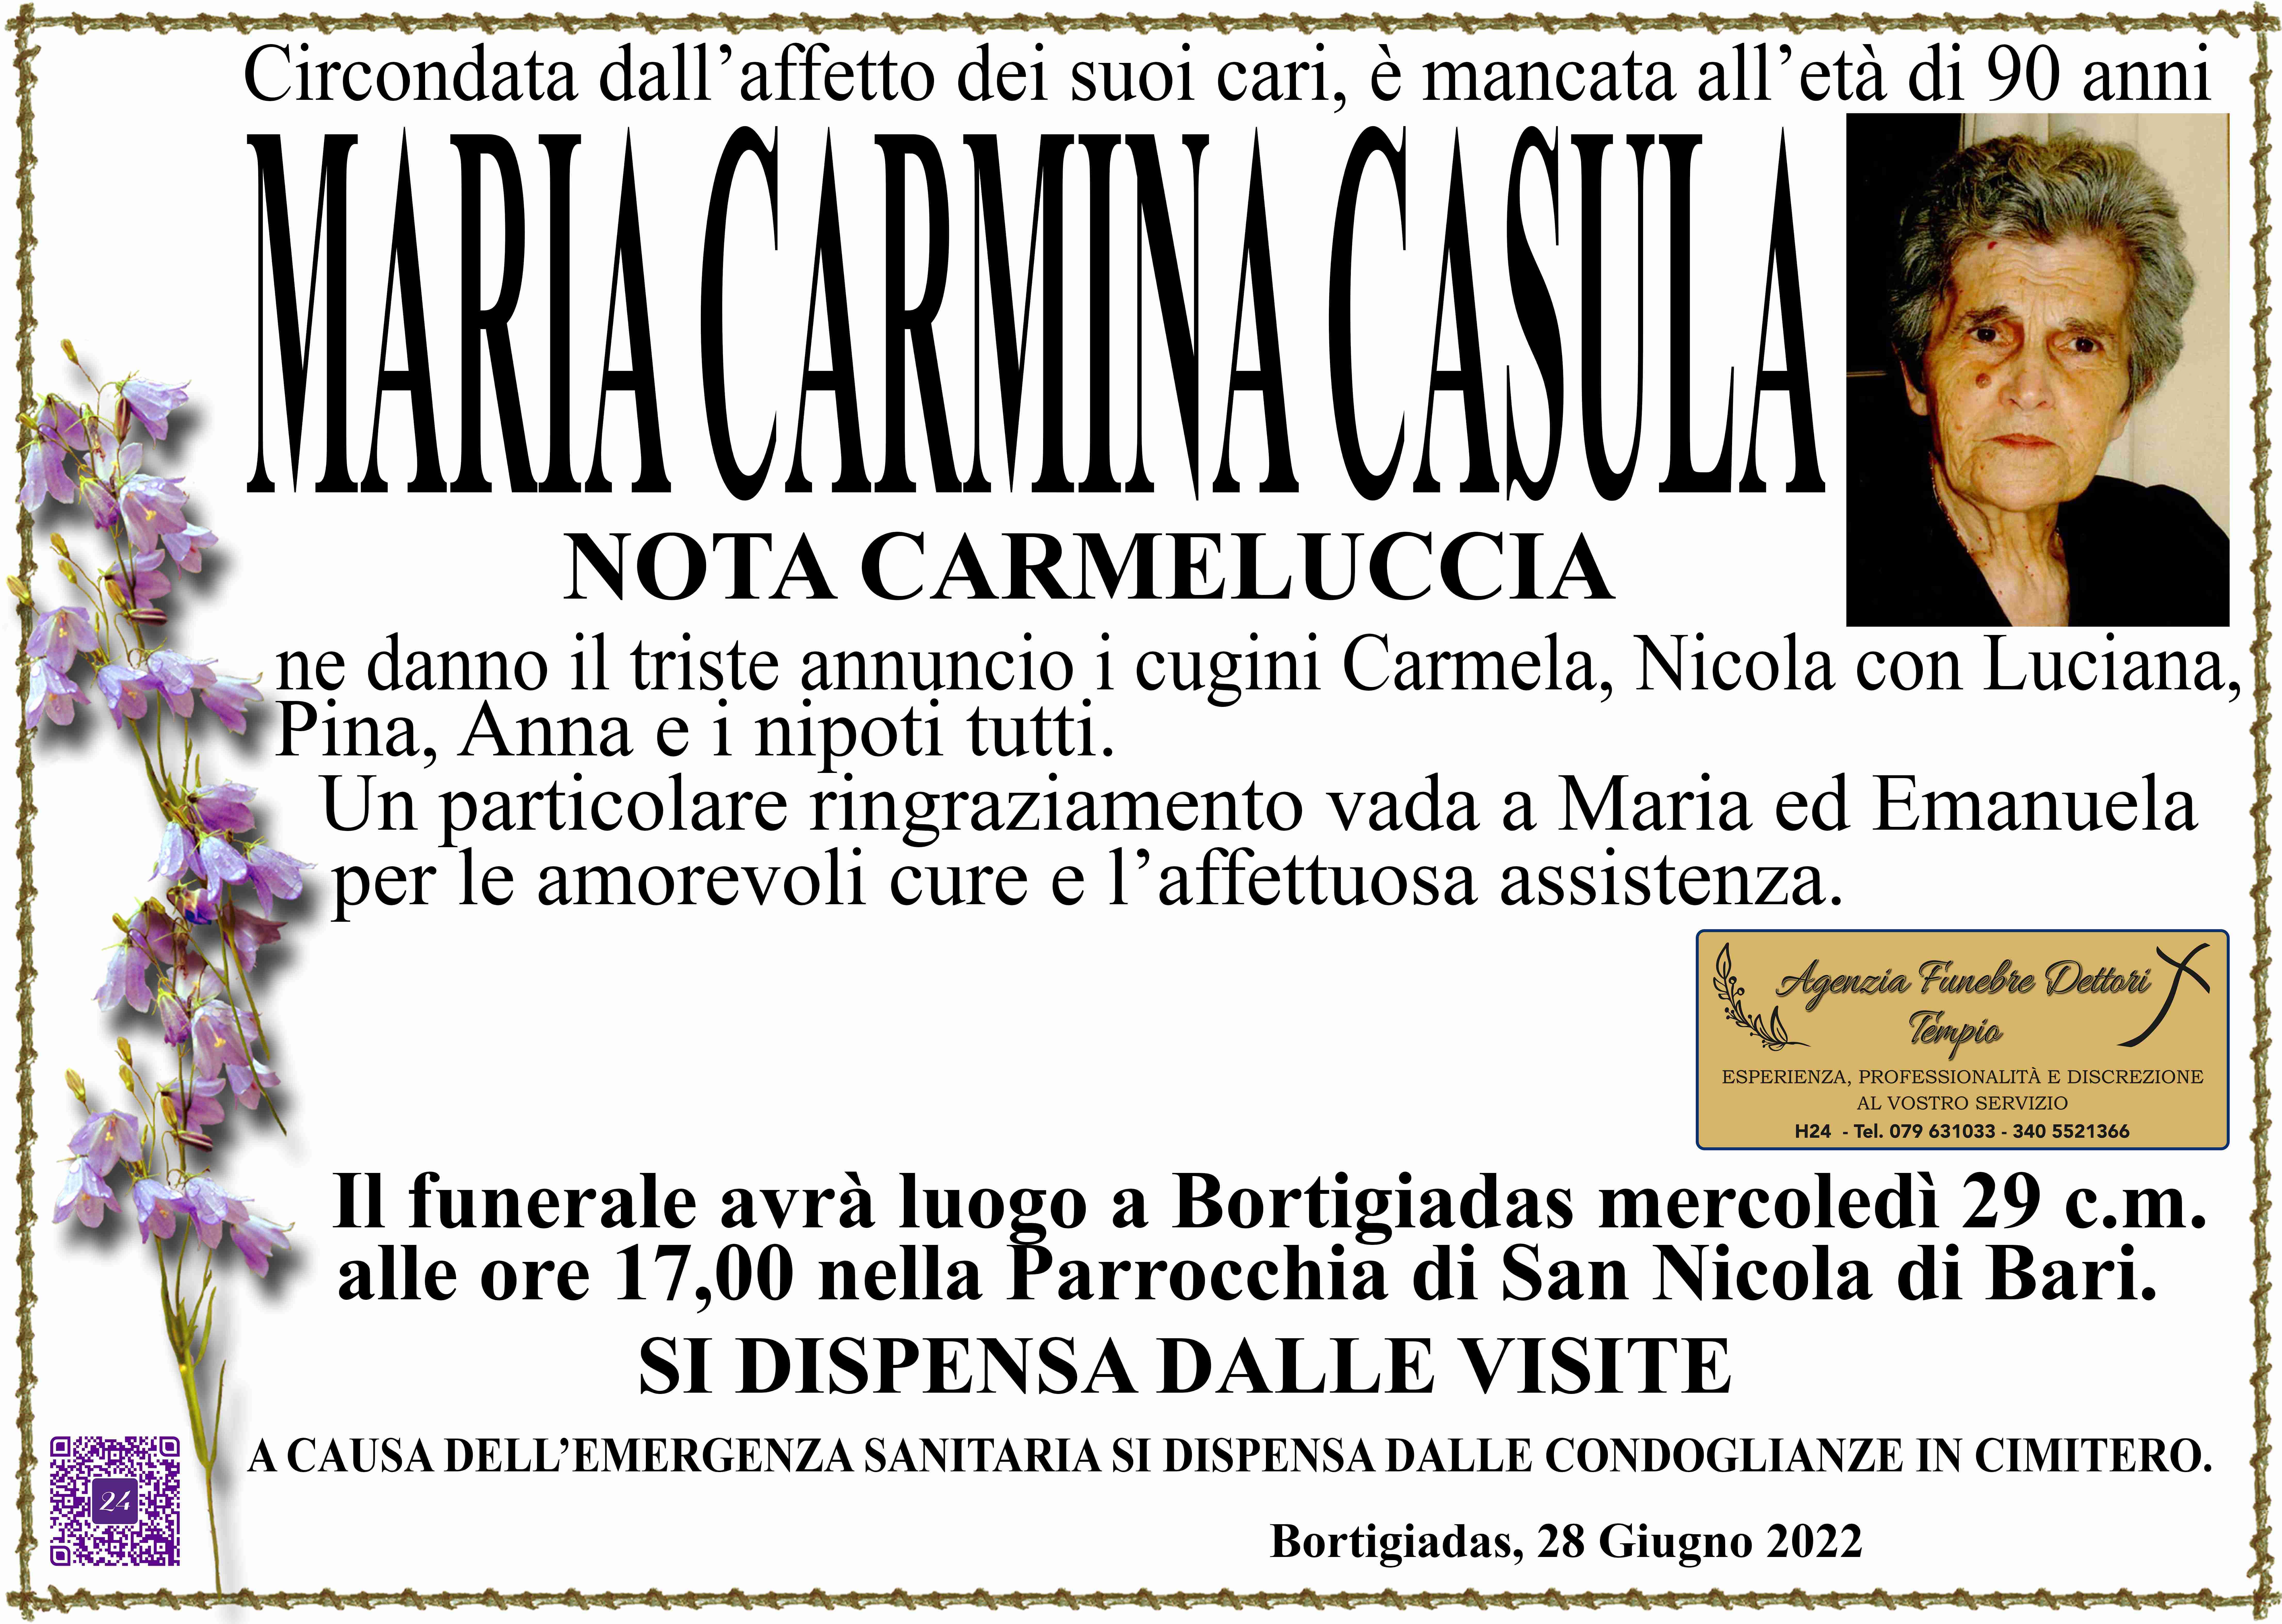 Maria Carmina Casula